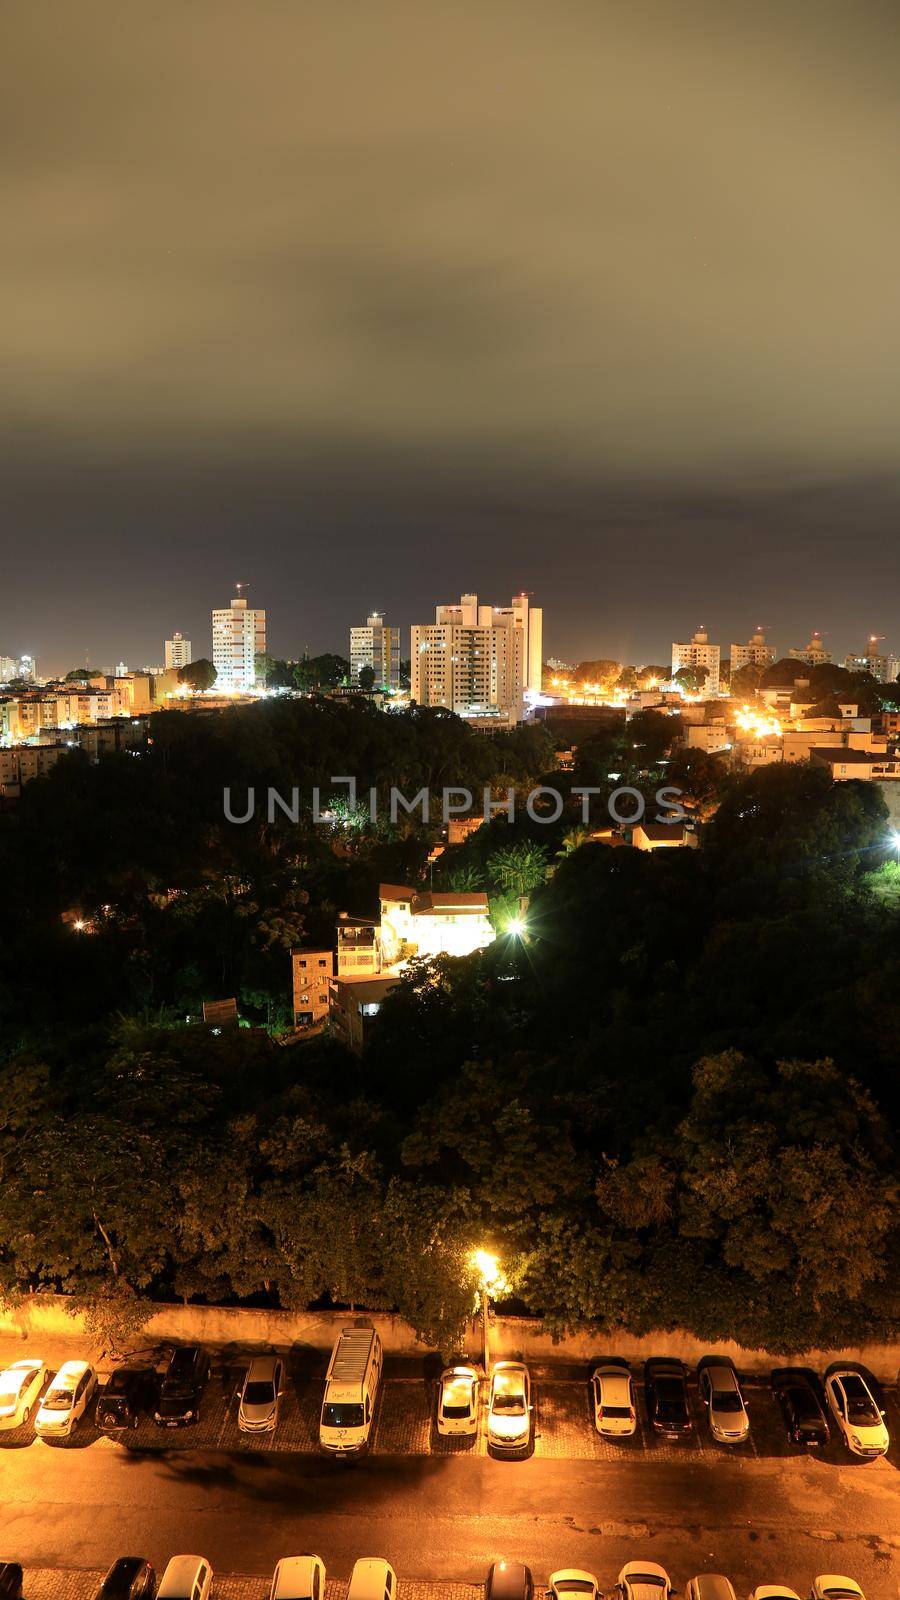 salvador, bahia / brazil - july 2, 2020: night views of the Cabula neighborhood in the city of Salvador.
